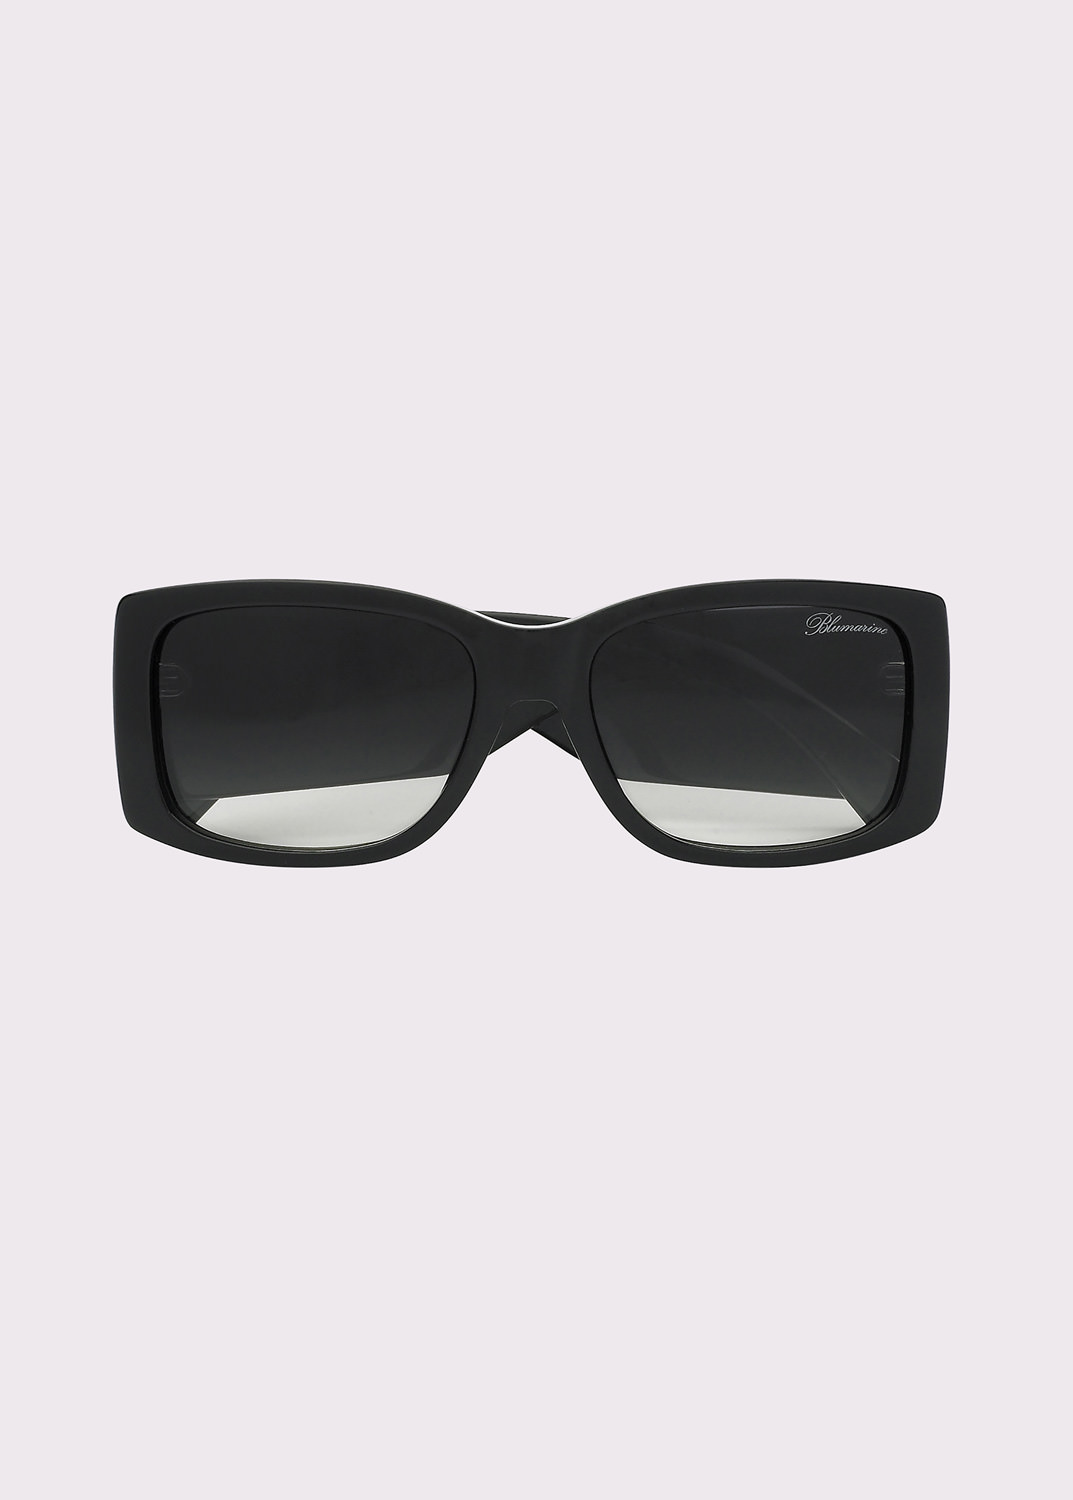 Chanel sunglasses eyewear square shape ladies black acetate